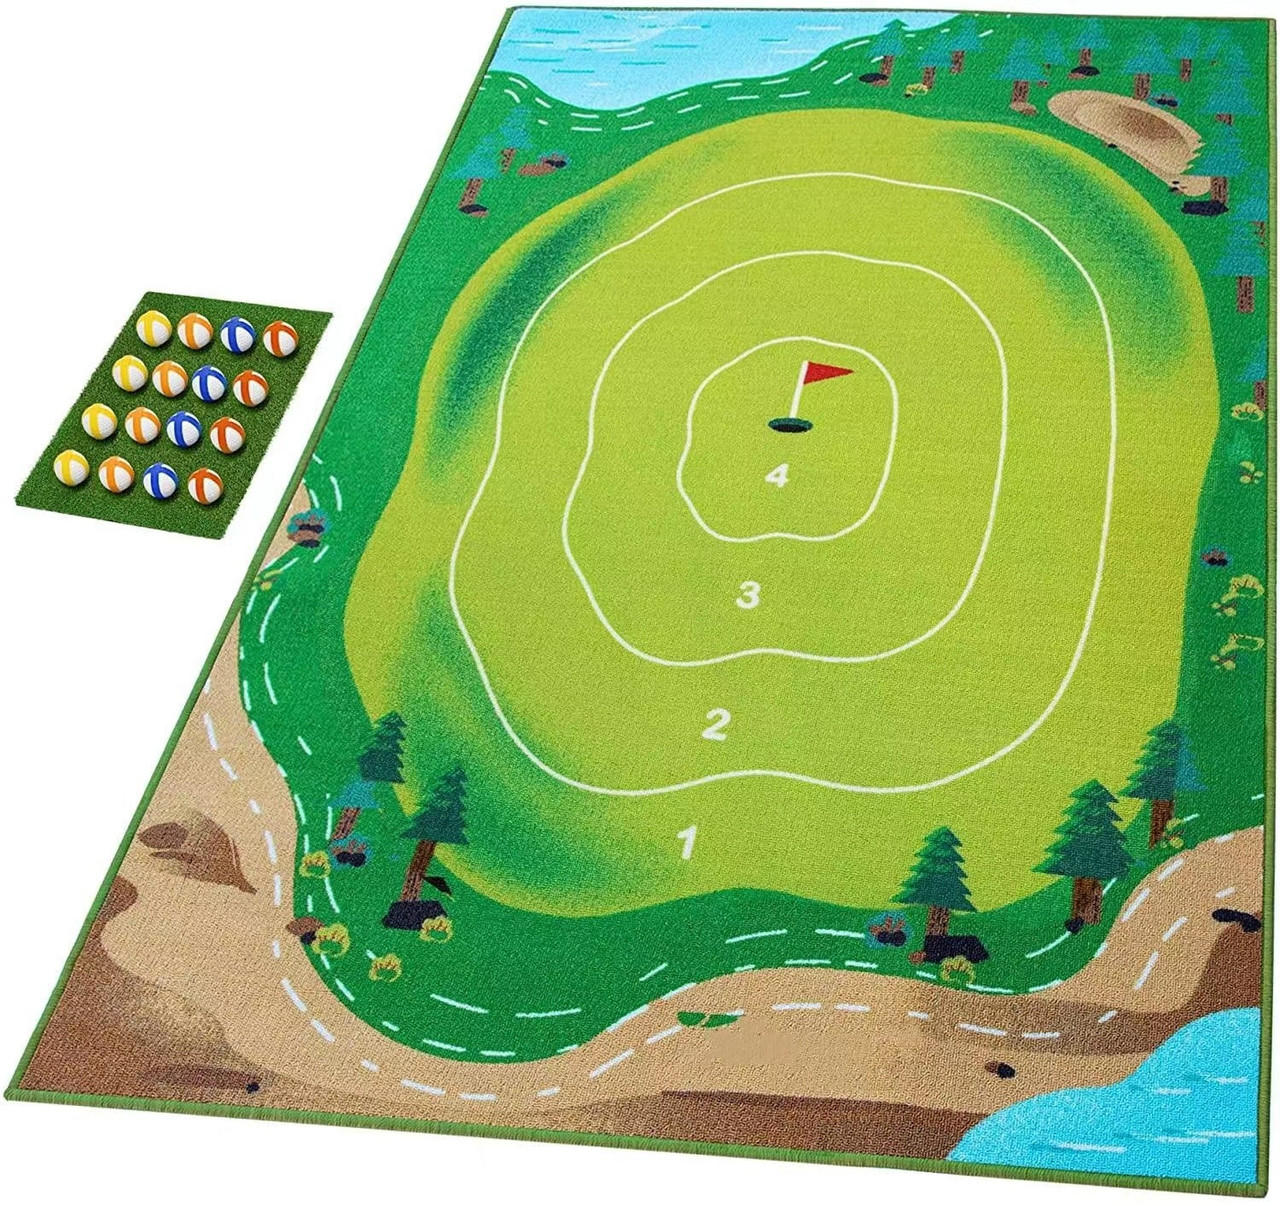 Jeu de mini-golf intérieur Golfeur jeu de golf intérieur Mini golf  d'intérieur Ensemble de jeux